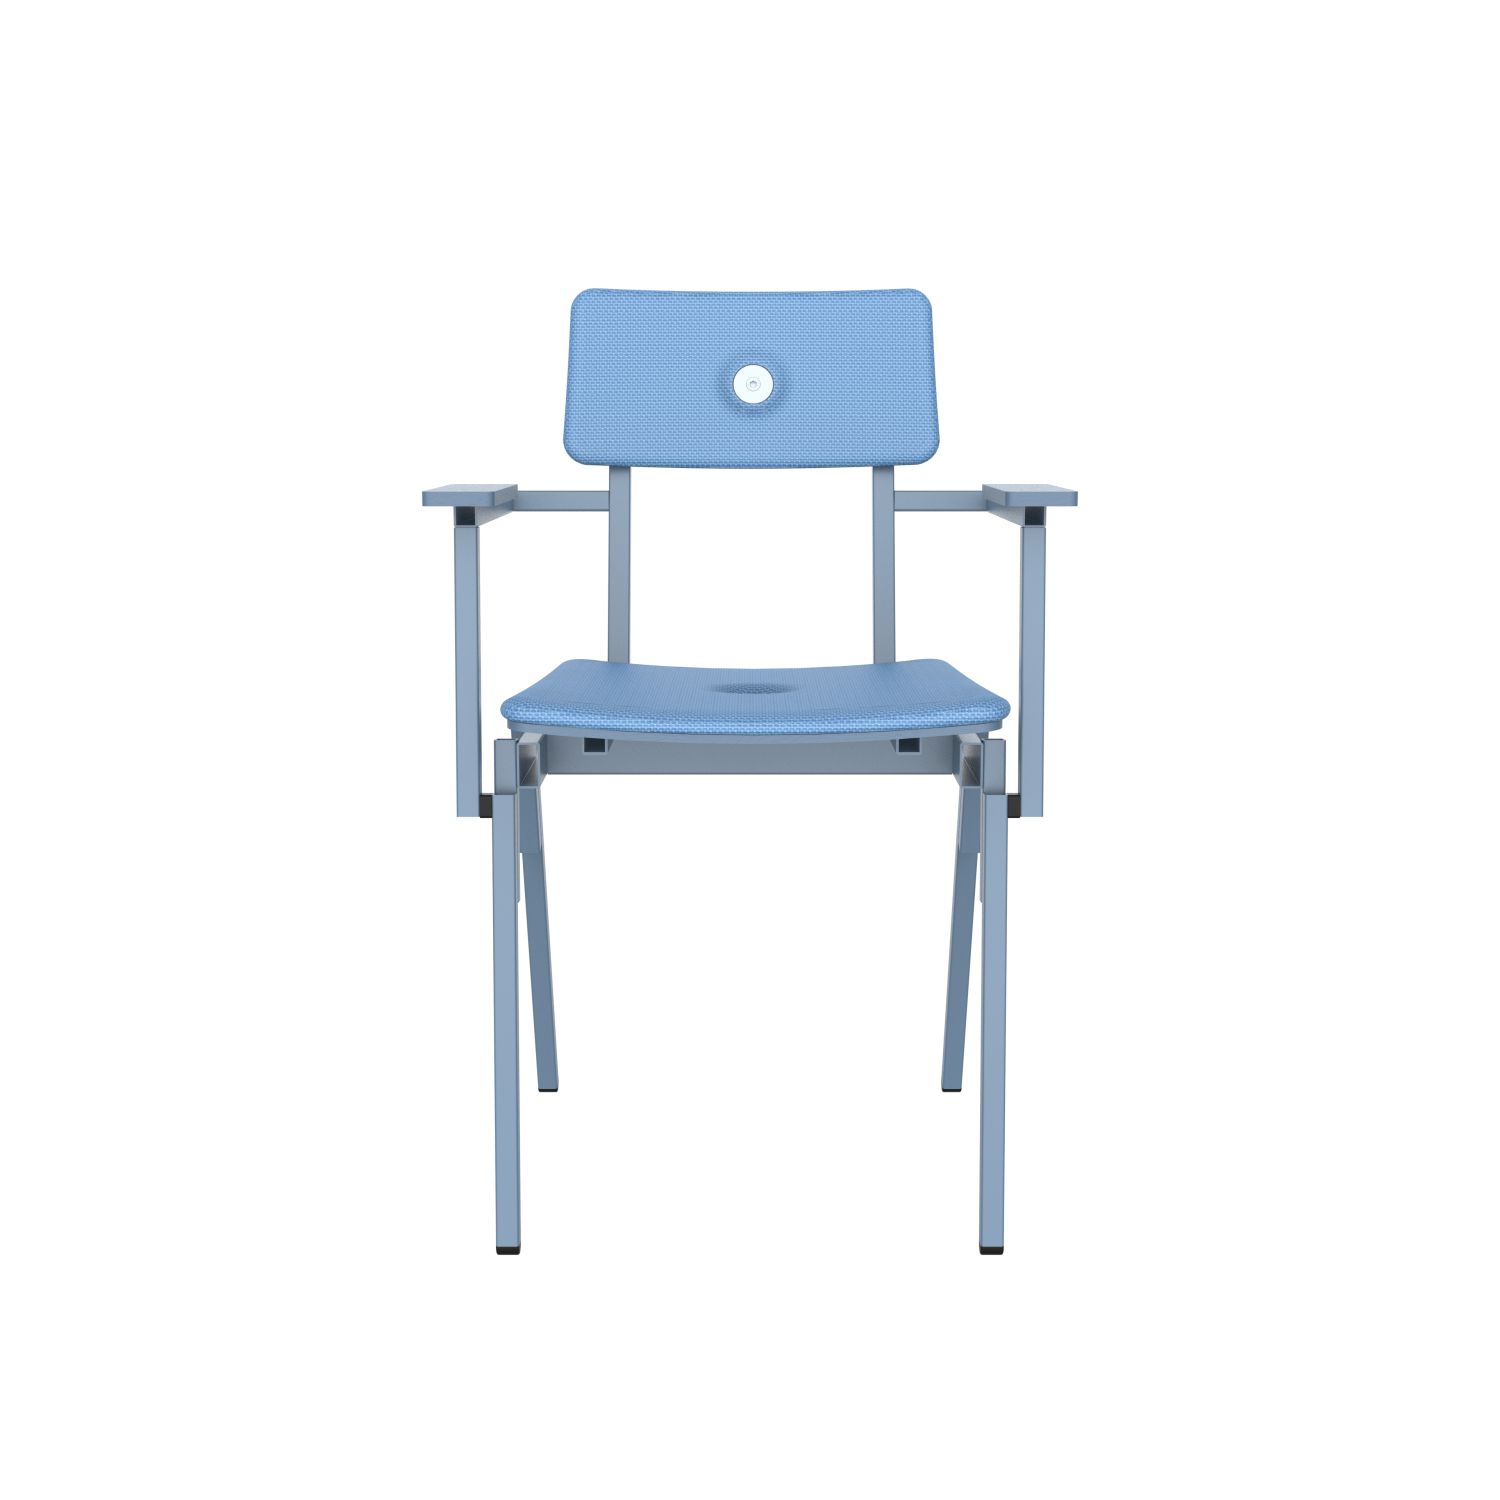 lensvelt piet hein eek mitw upholstered chair with armrests blue horizon 040 pigeon blue ral5014 hard leg ends